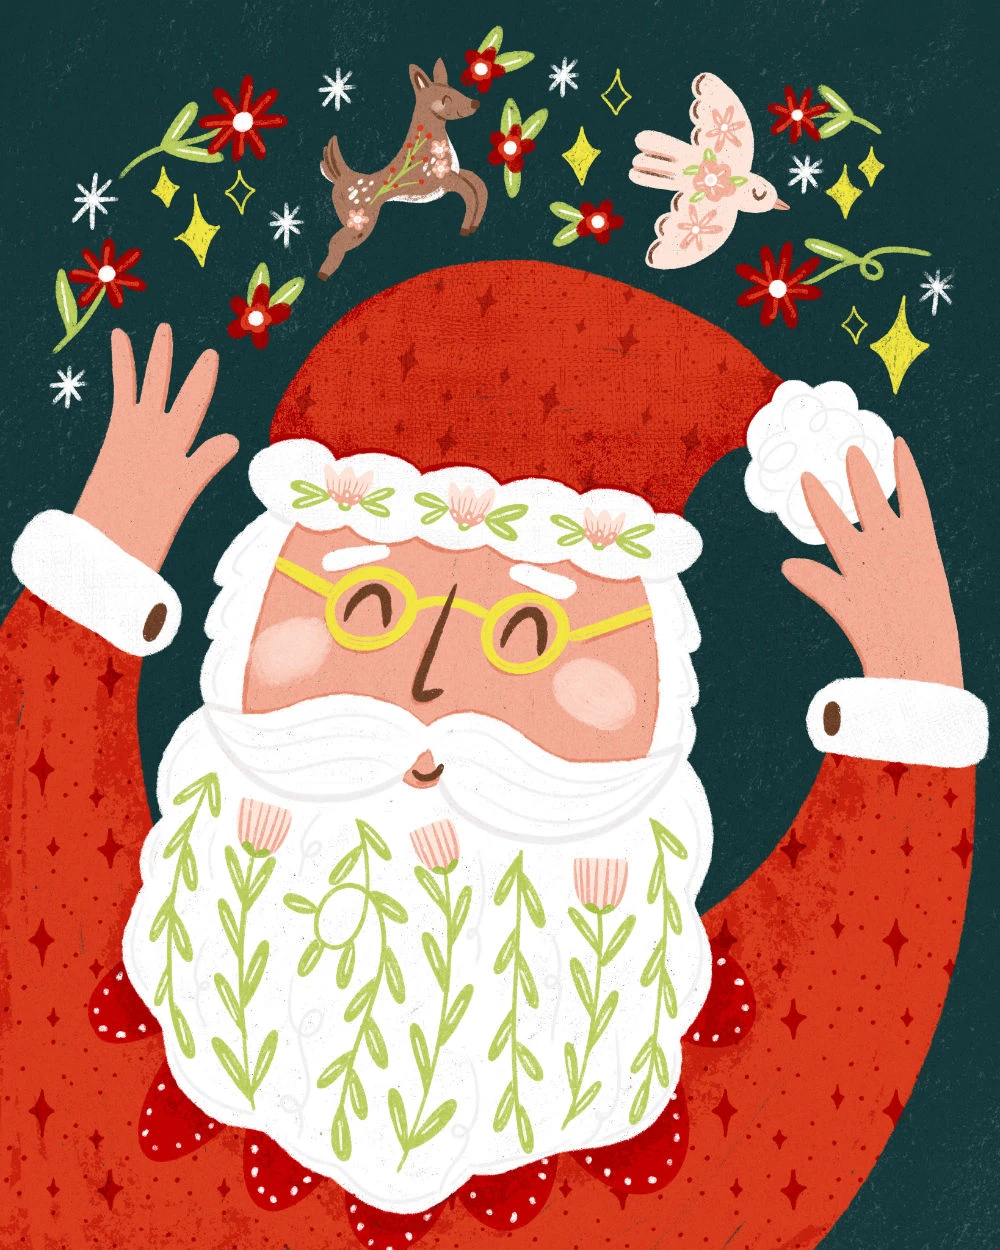 Whimsical Folk Art Santa Claus illustration